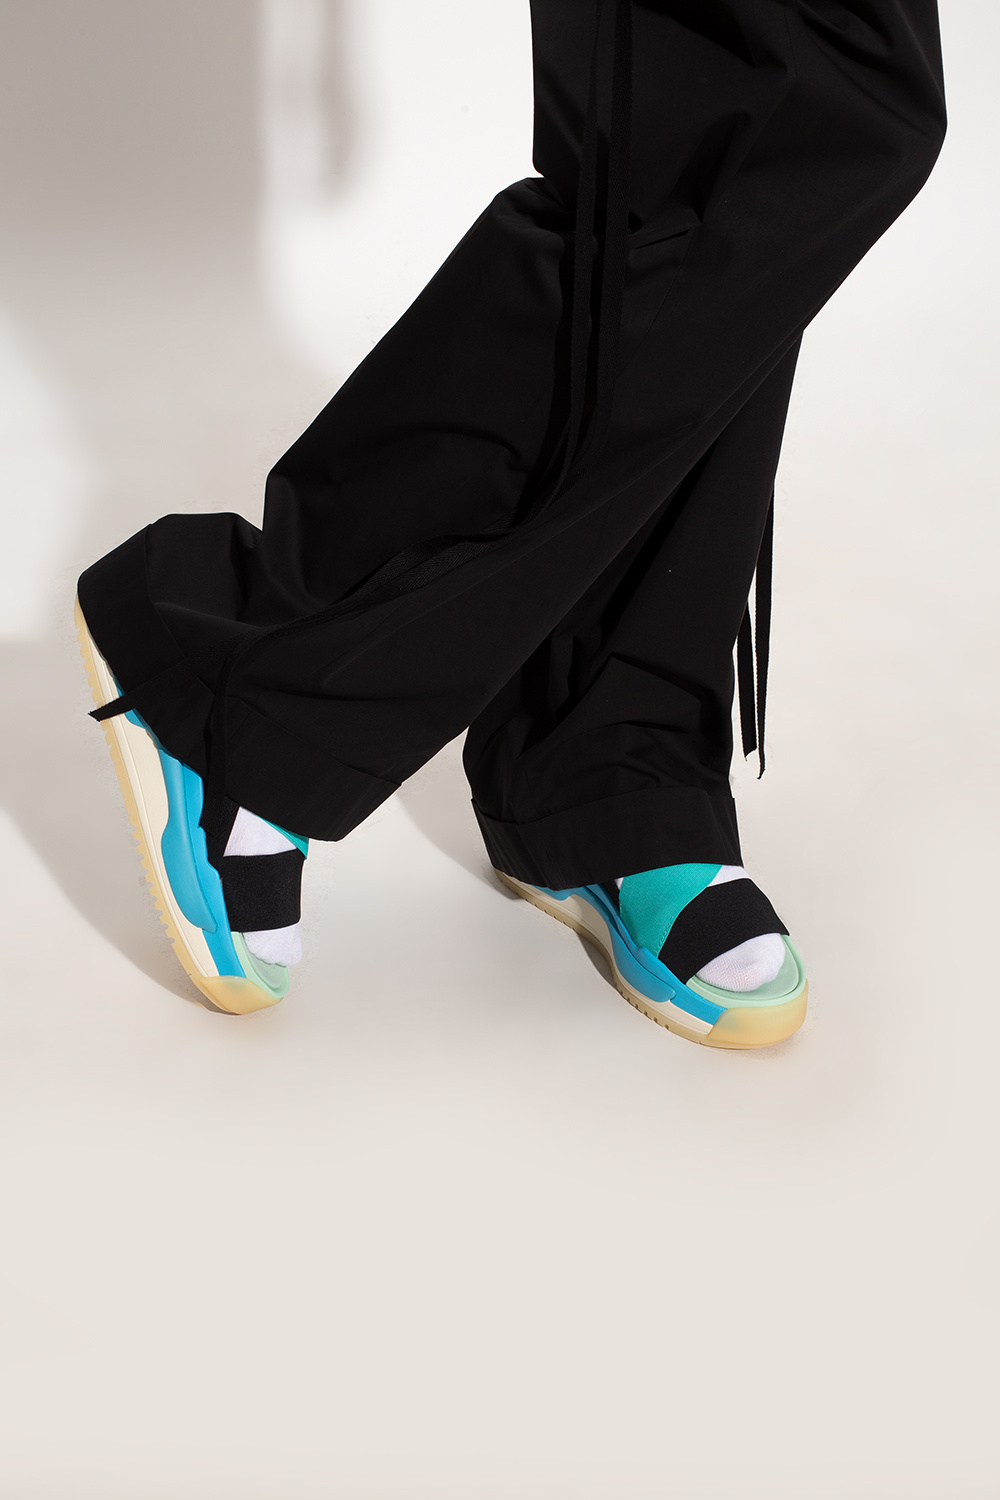 alexander mcqueen wmns oversized sneaker white galaxy blue 558945 whnbk ‘Hokori’ sandals